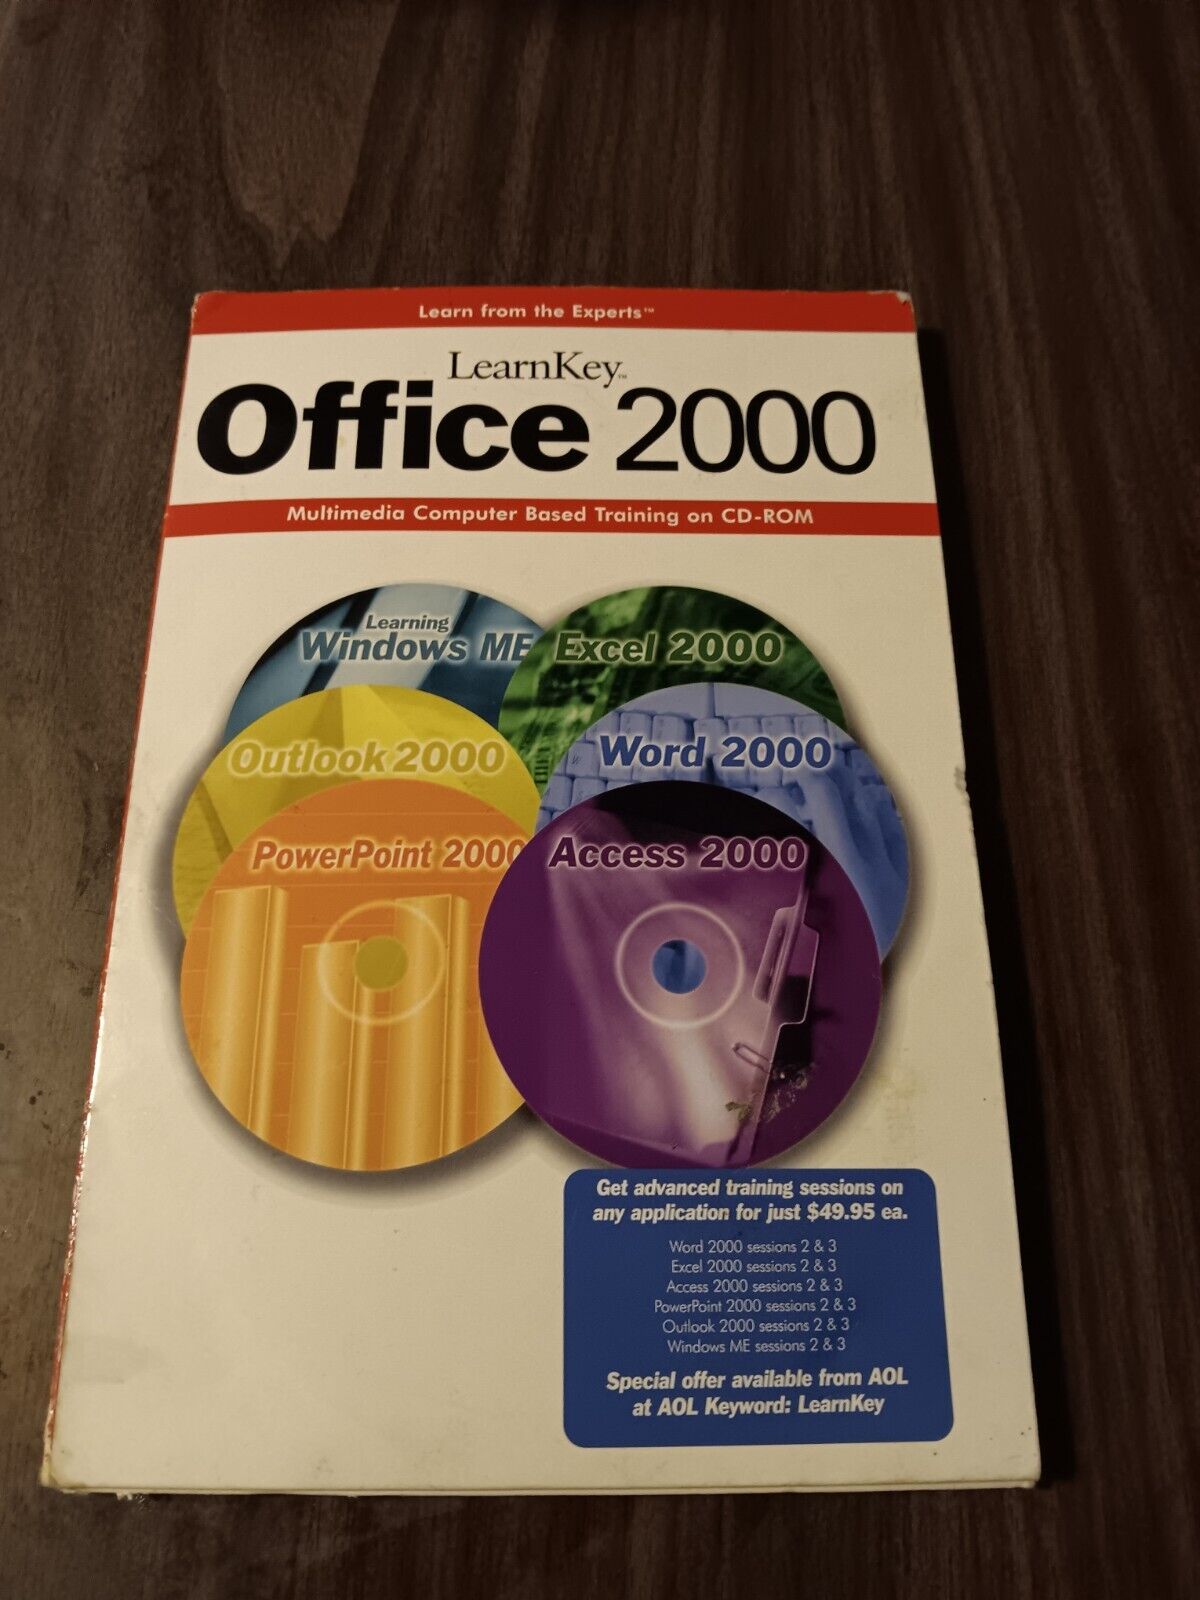 LearnKey Office 2000 Multimedia Computer Based Training on 6 CD-Roms